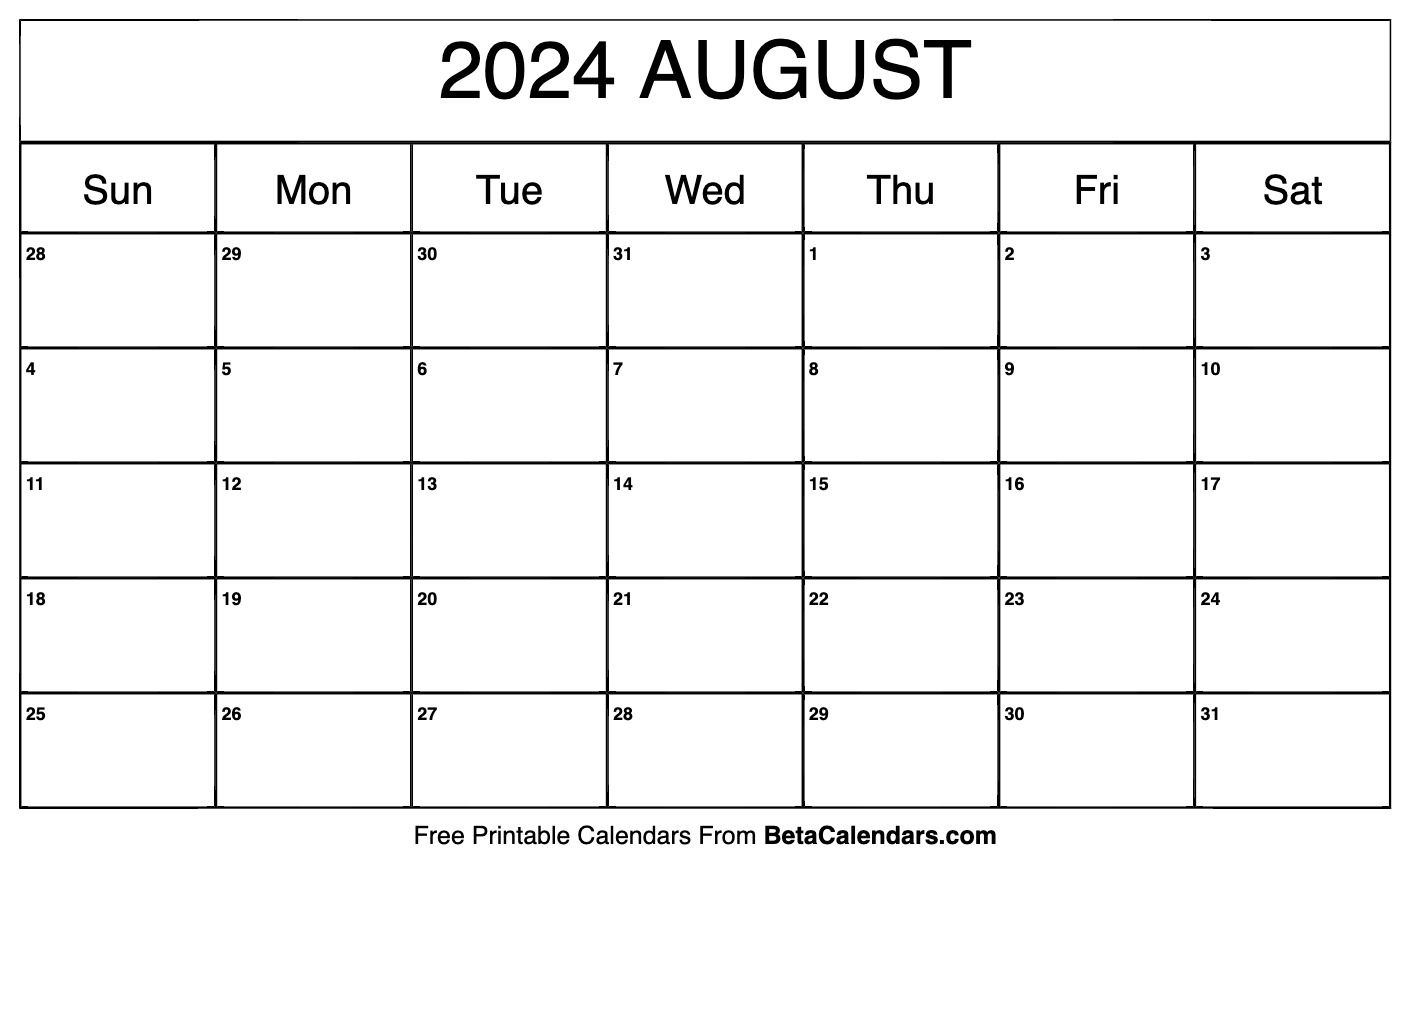 Free Printable August 2024 Calendar pertaining to Free Printable August 2024 Calender